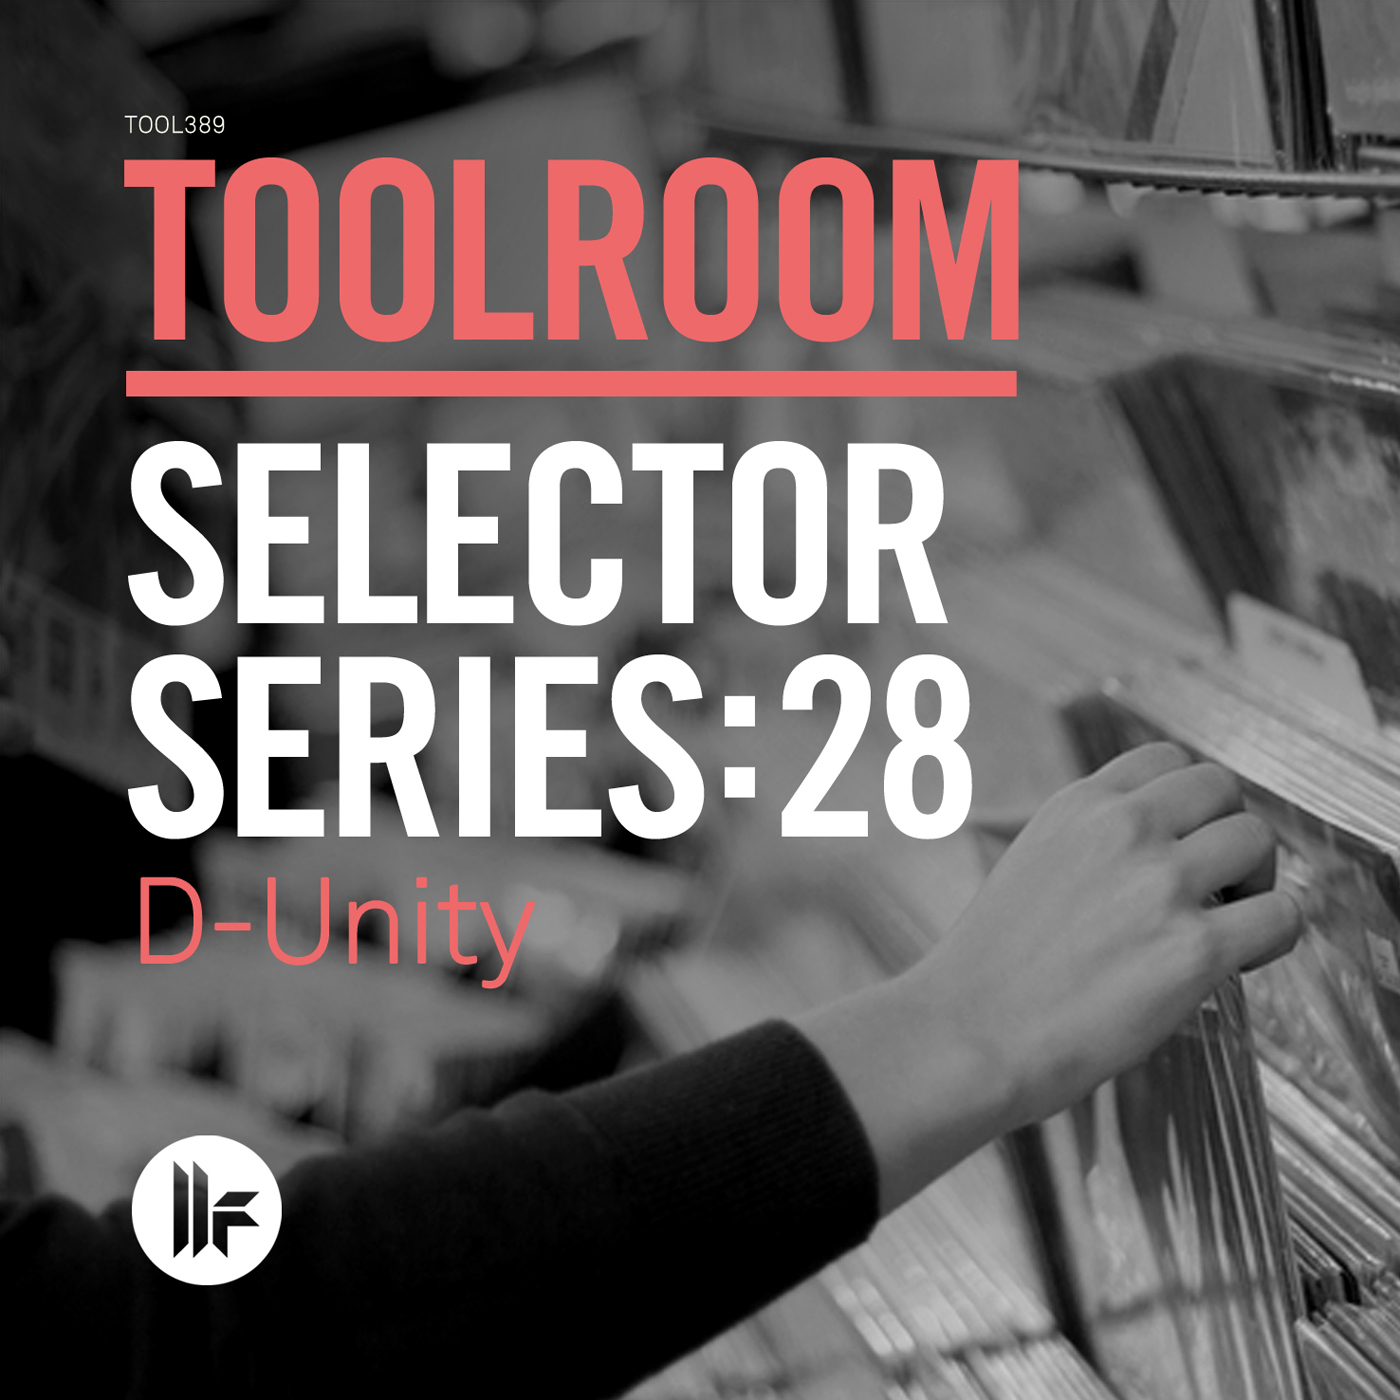 Toolroom Selector Series 28 D-Unity (Continuous DJ Mix)